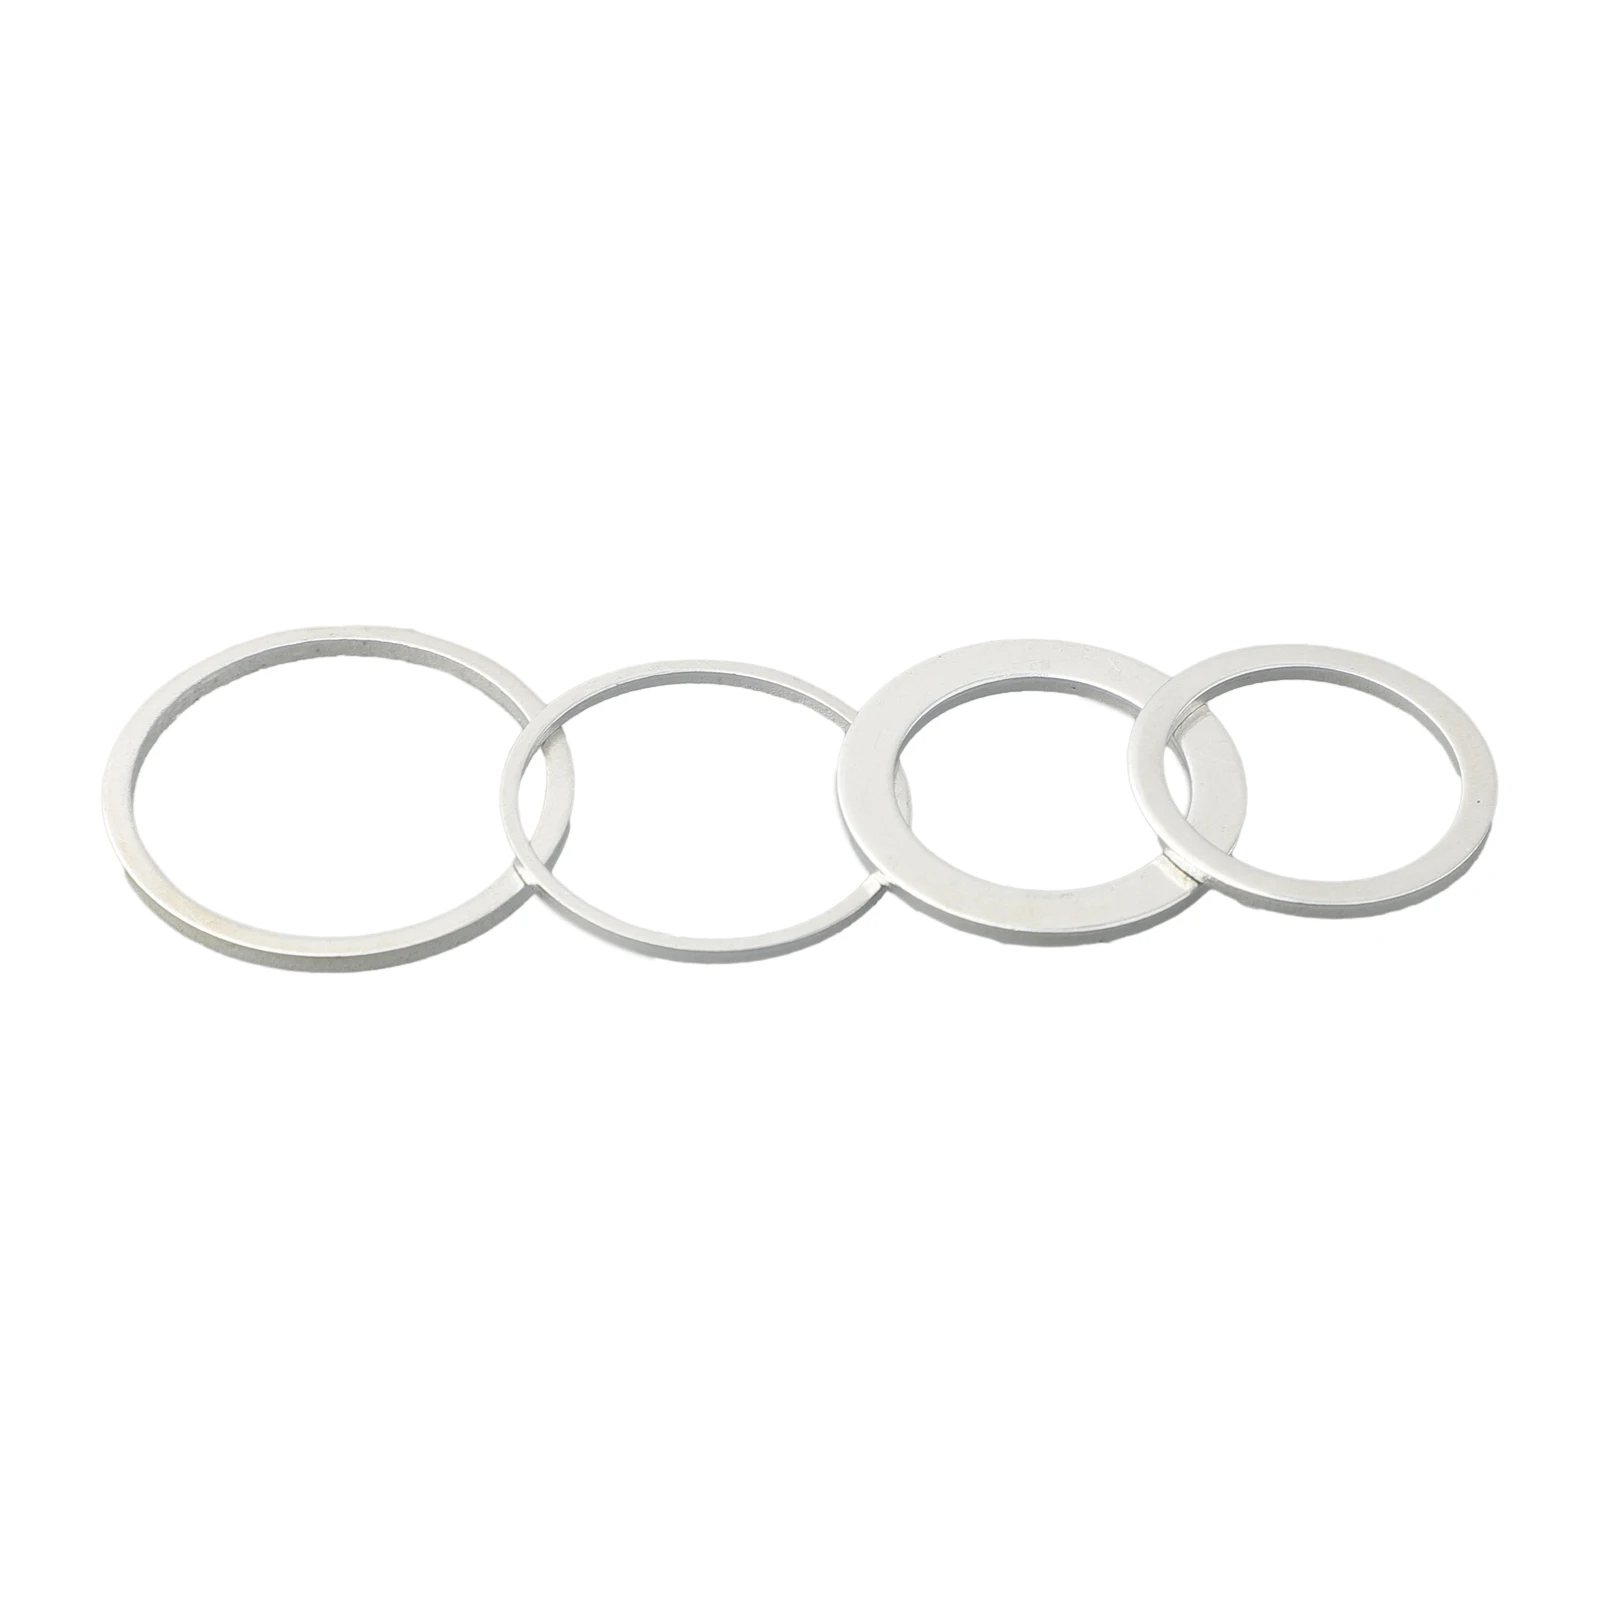 Circular Saw Ring Reduction Ring Replacement Silver 4 Sizes 4Pcs Conversion Ring Metal Useful Brand New Durable equipment set durable circular saw conversion ring internal